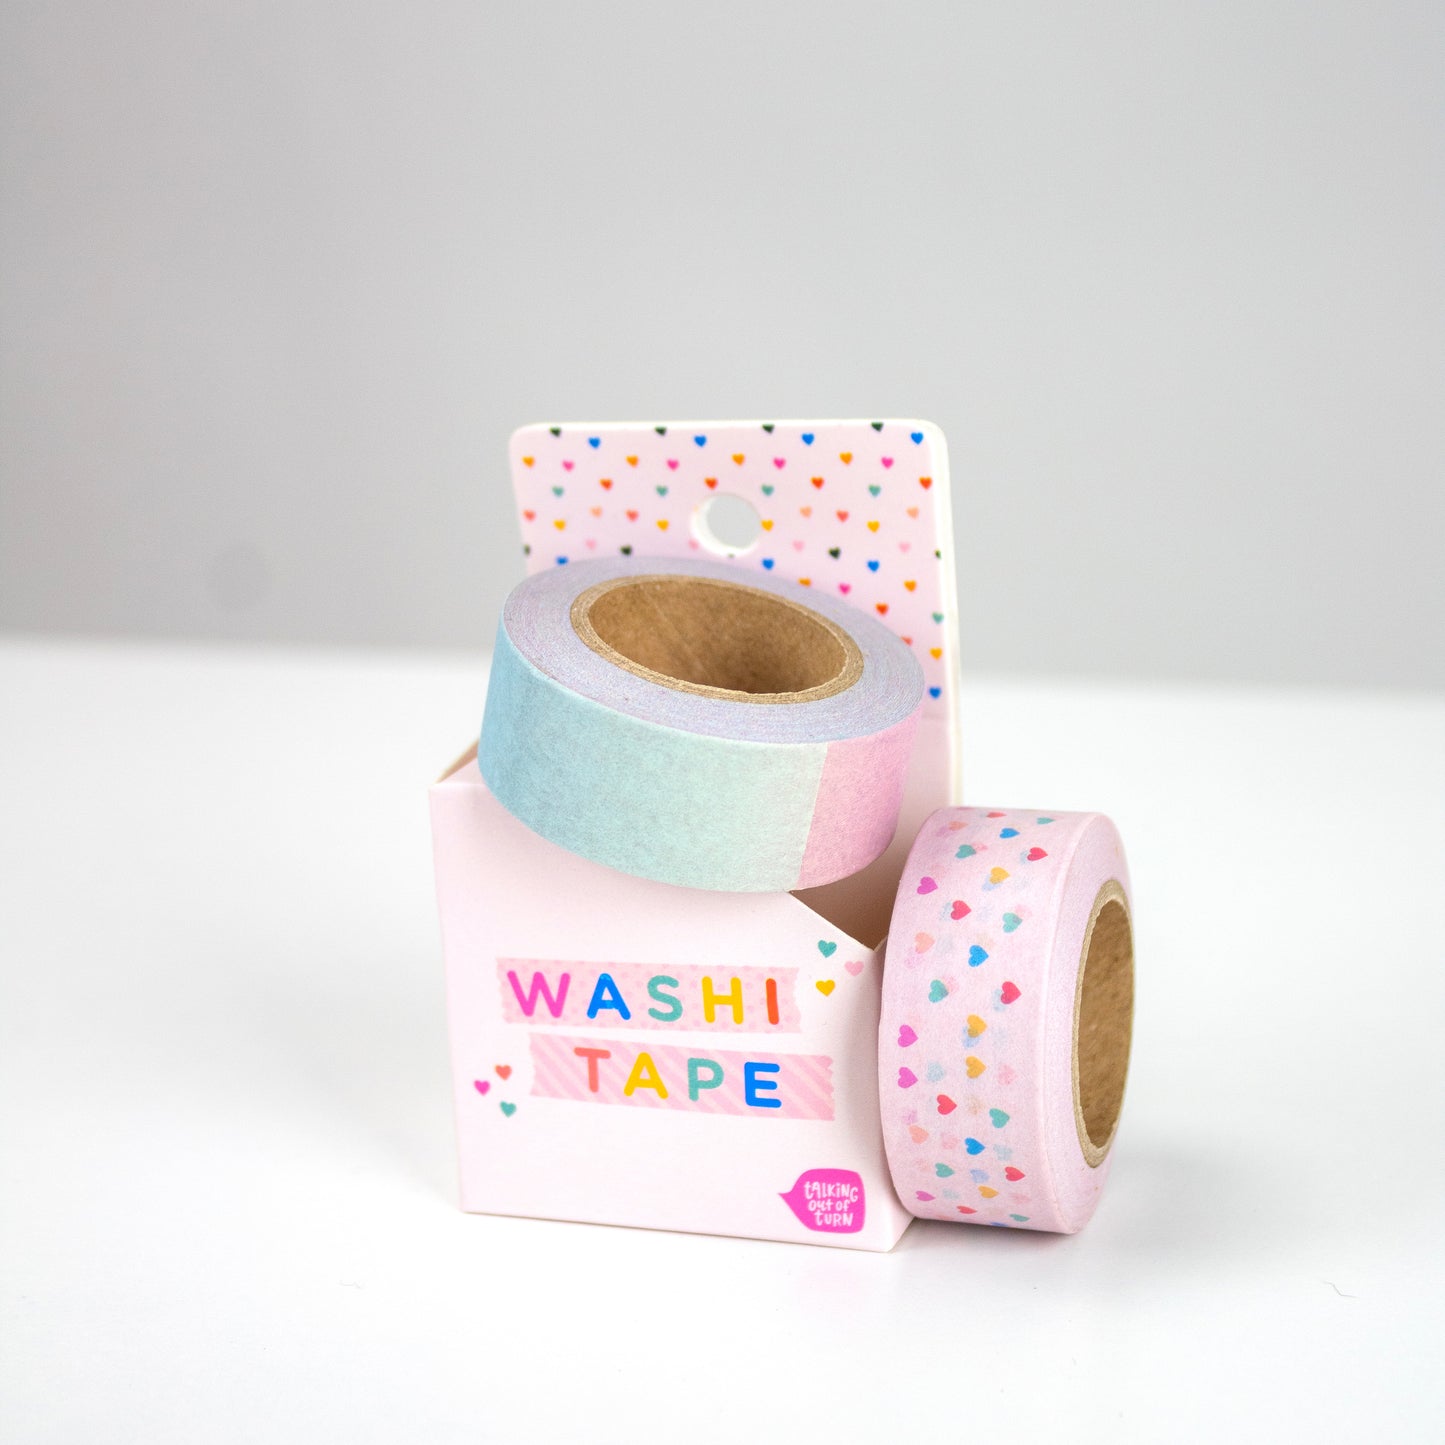 Washi Tape Packs